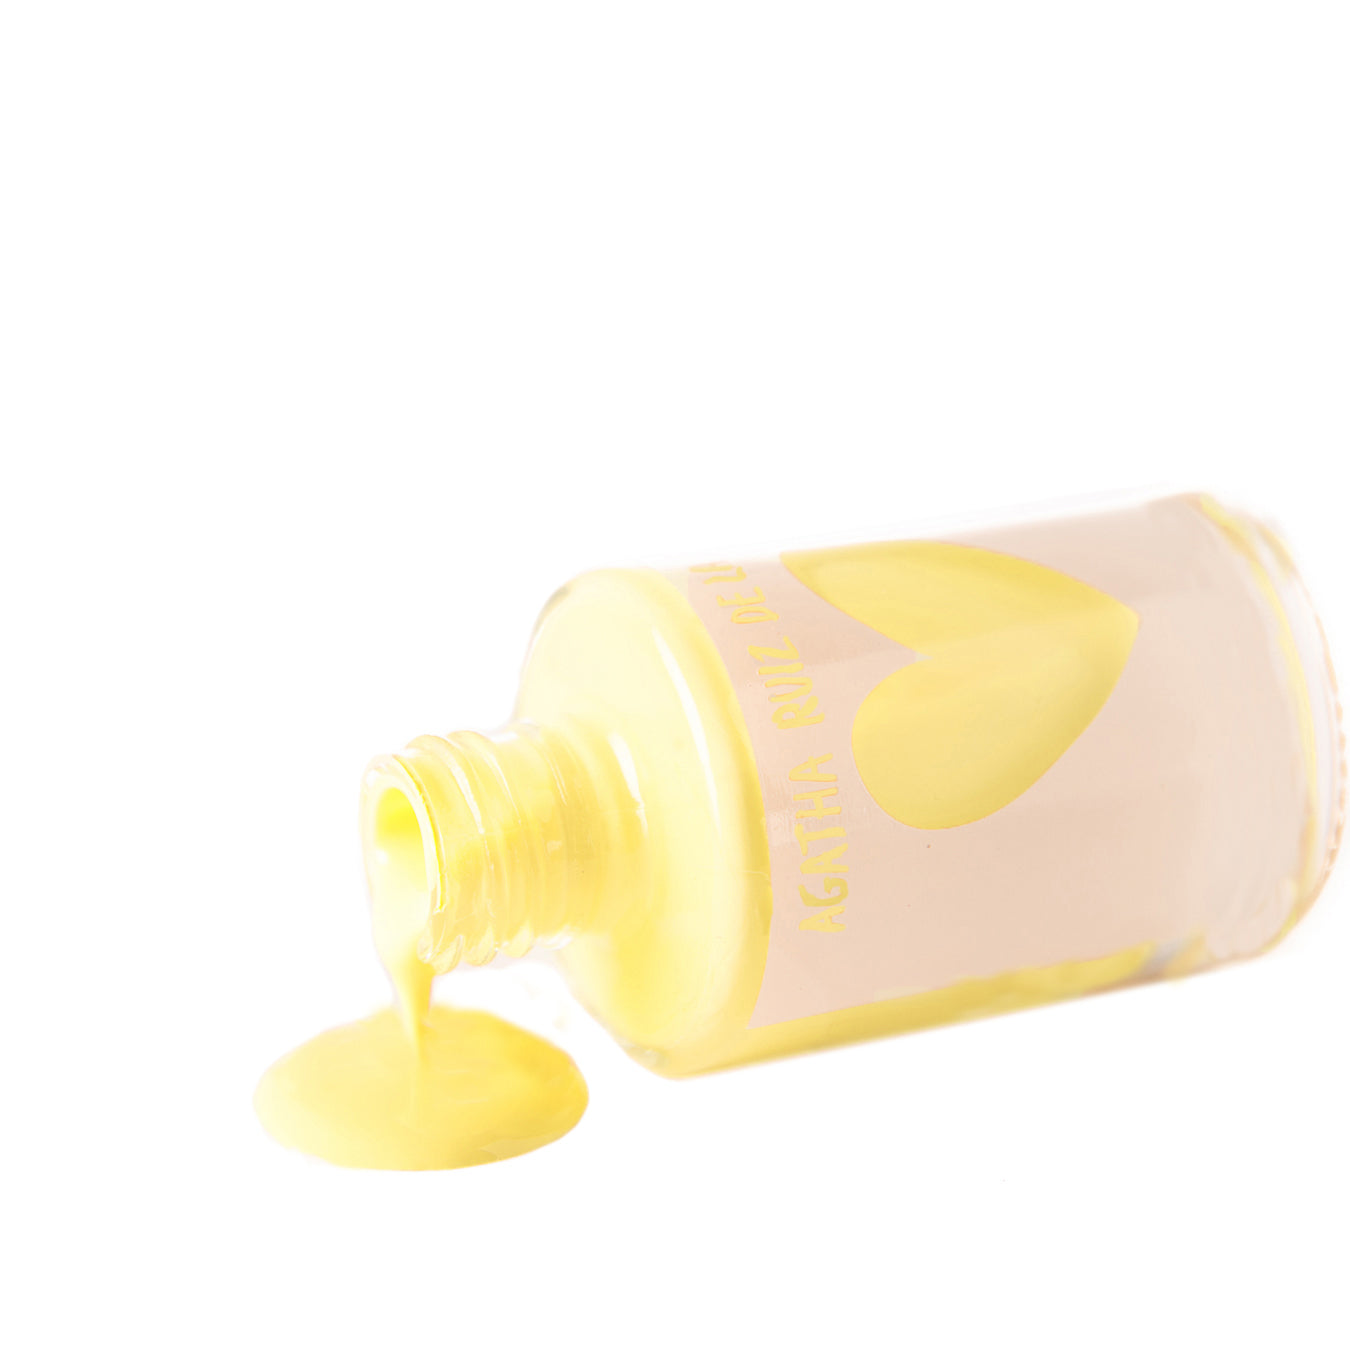 Spilled Agatha Ruiz de la Prada Nail Polish Pastel Yellow